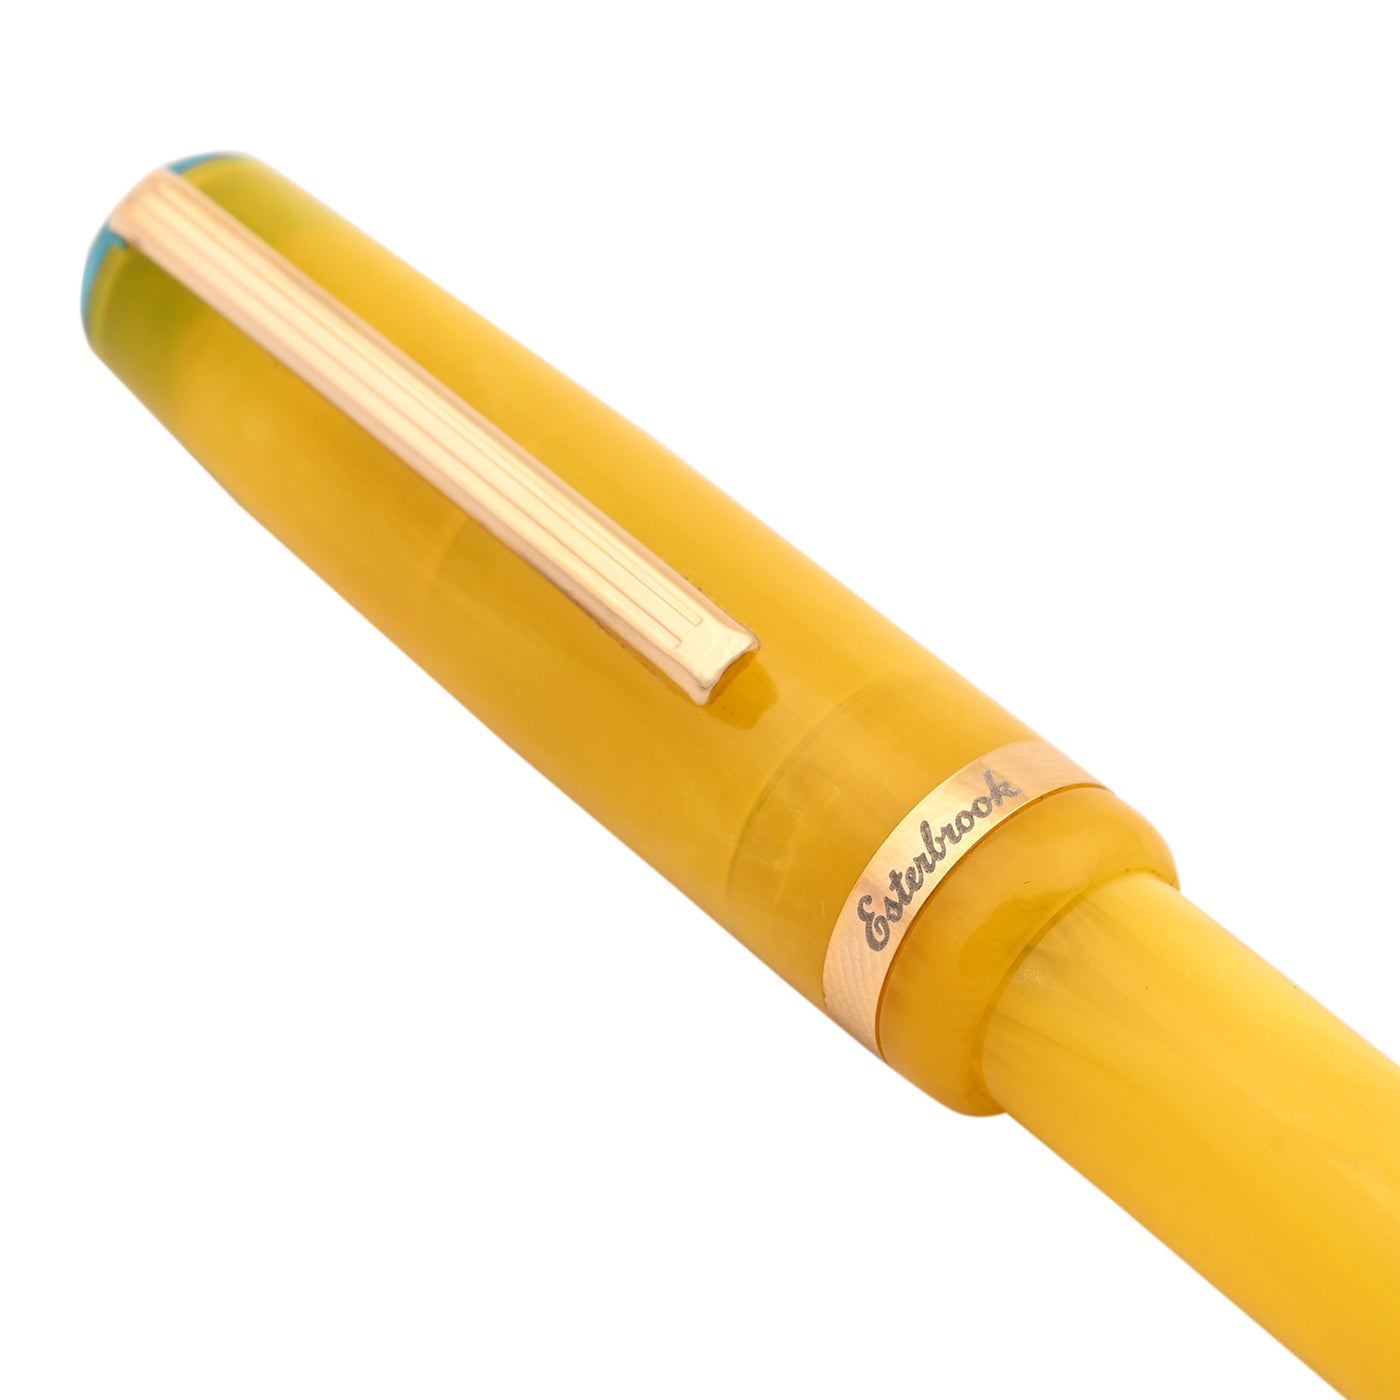 Esterbrook JR Pocket Fountain Pen - Lemon Twist GT 5